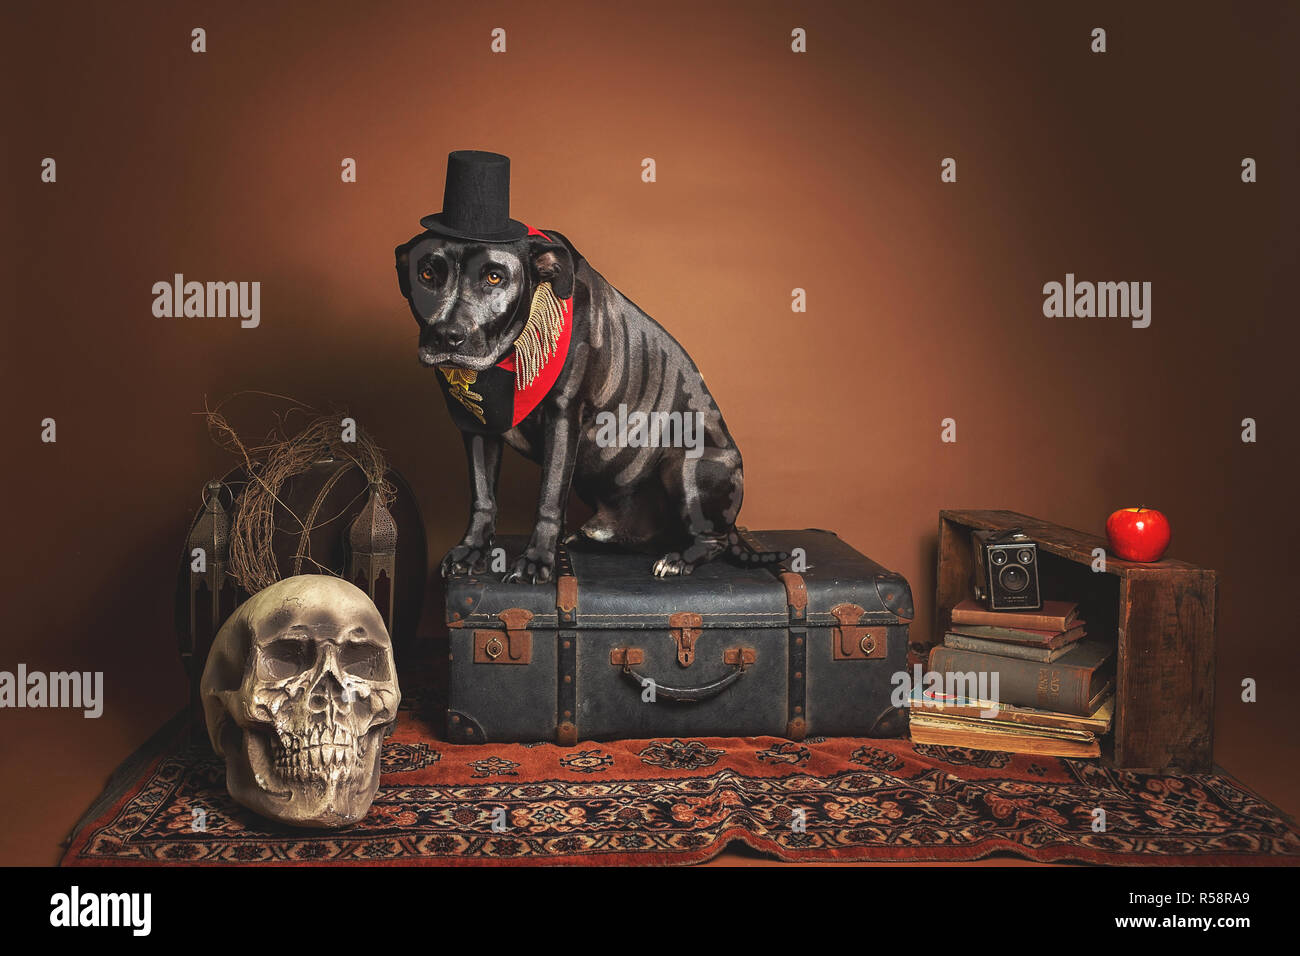 halloween spooky dogs dress up Stock Photo